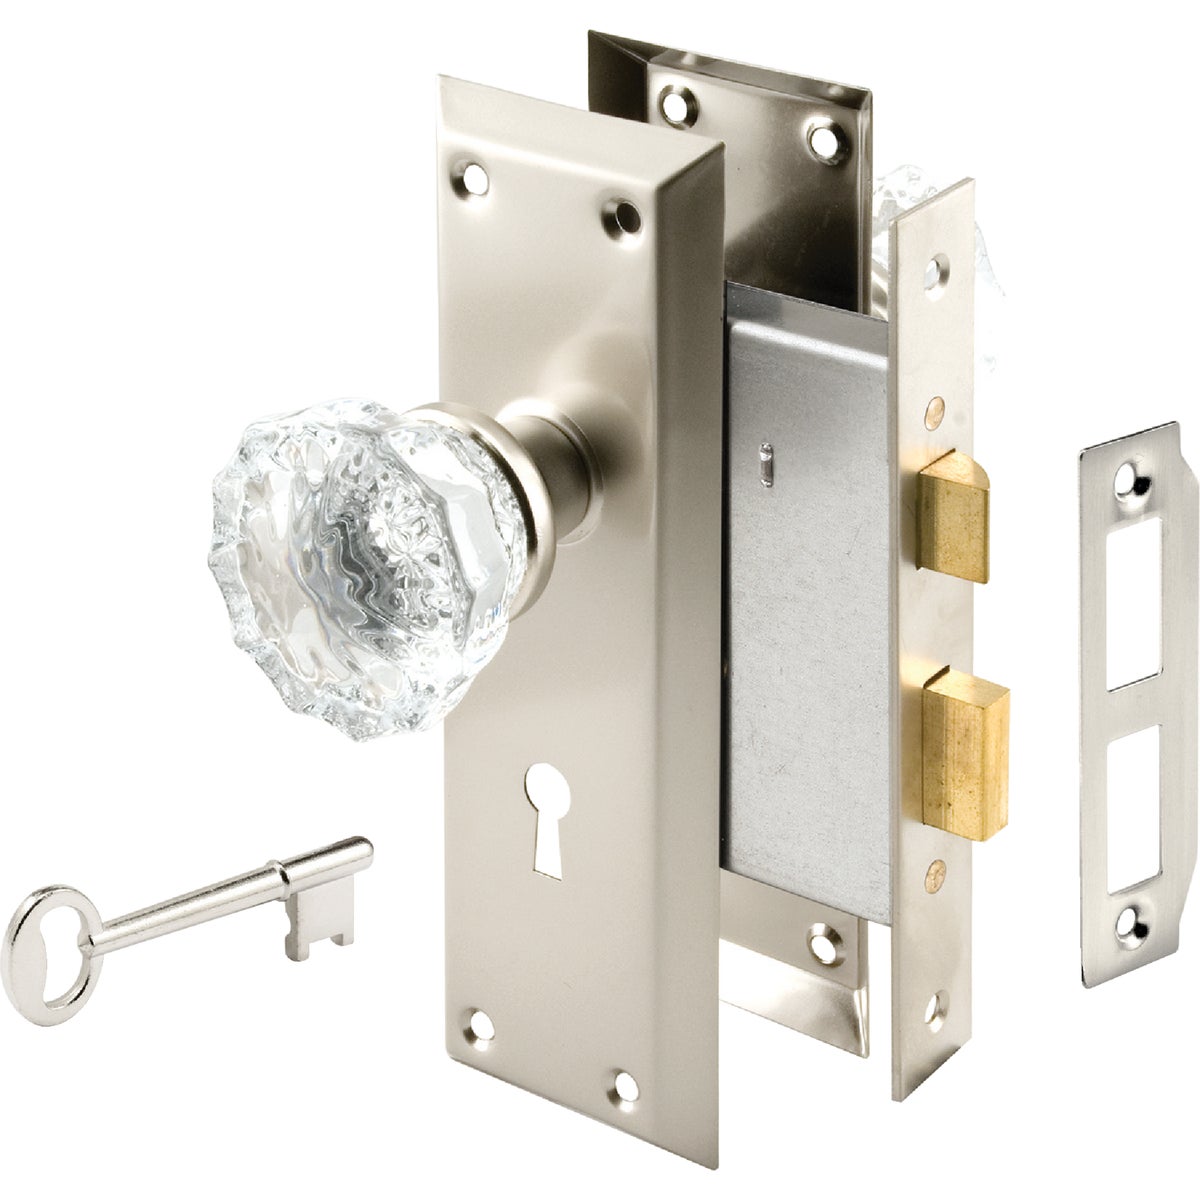 Defender Security Satin Nickel Keyed Mortise Entry Lock Set With Glass Knob